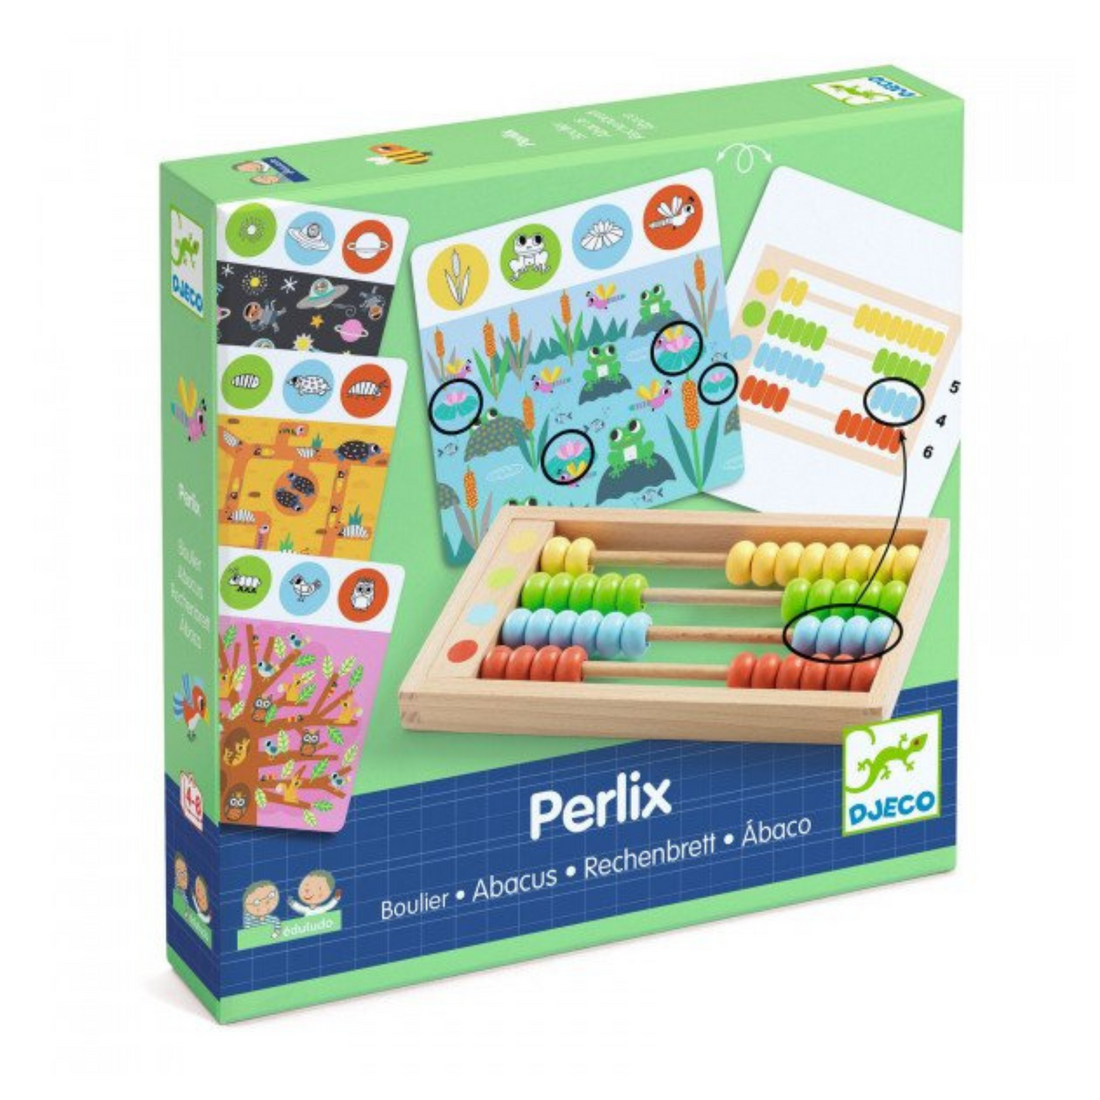 Educational game - Perlix